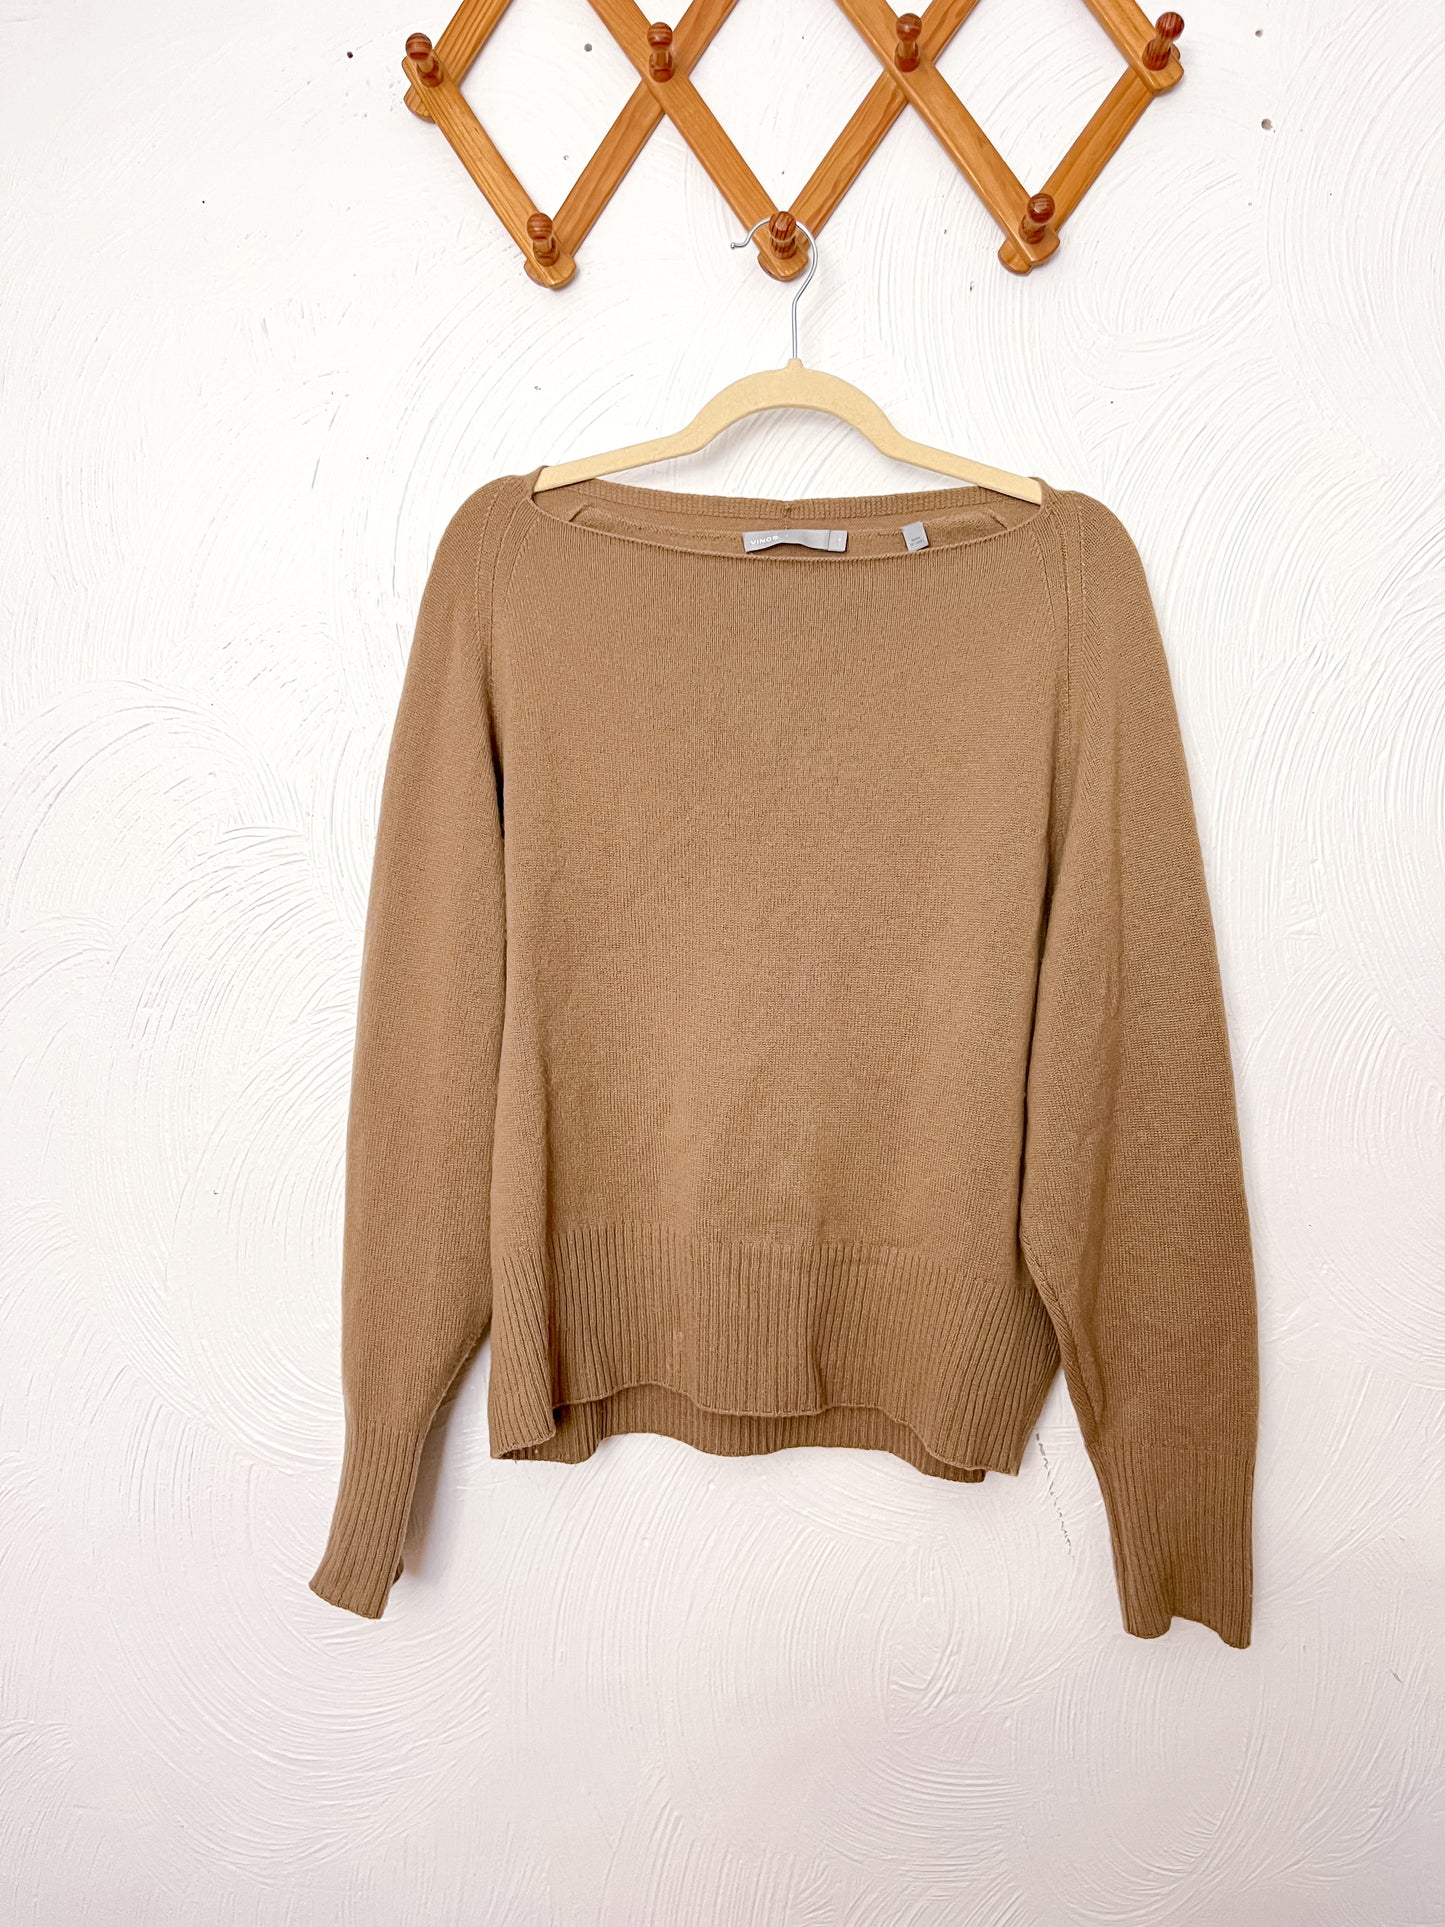 Vince. Cashmere Boatneck Sweater (M)